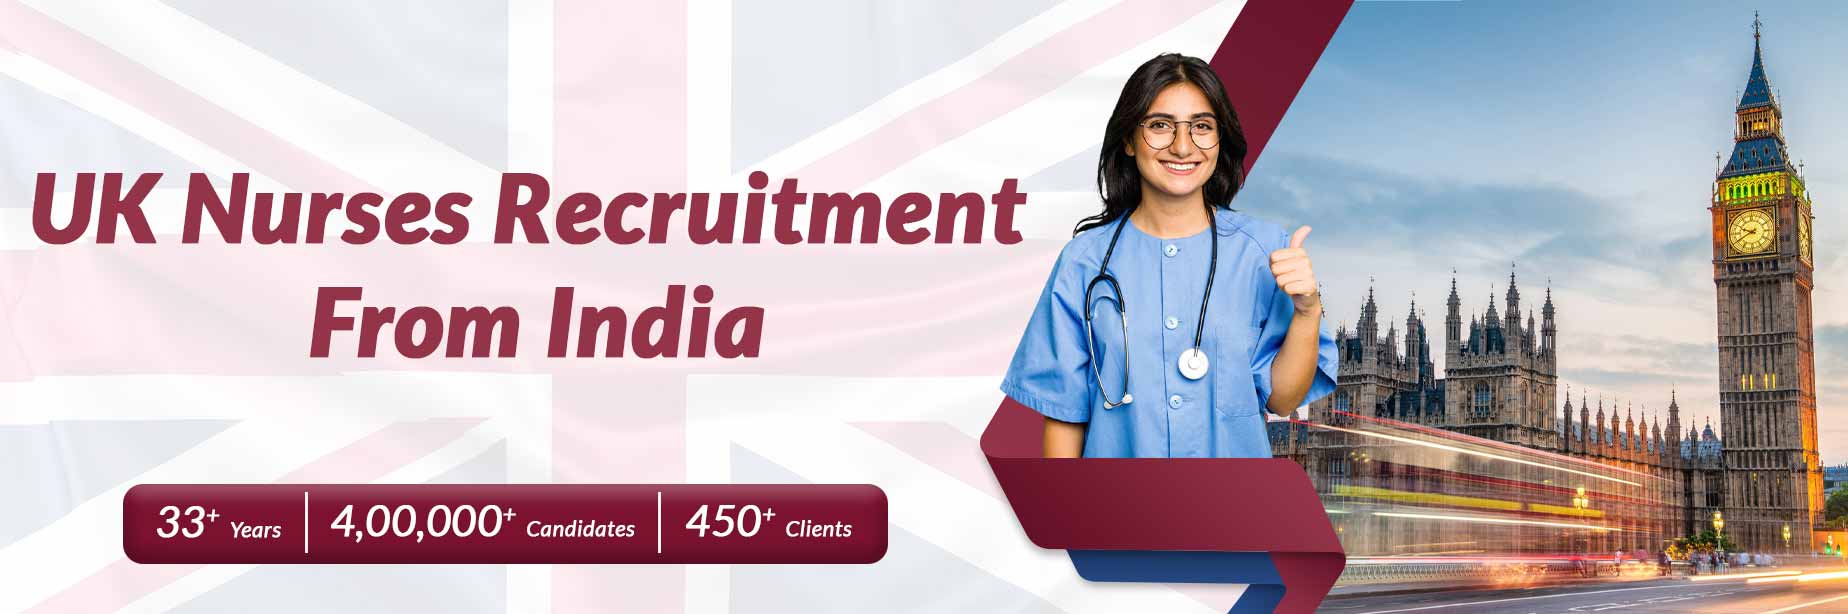 uk nurses recruitment from india